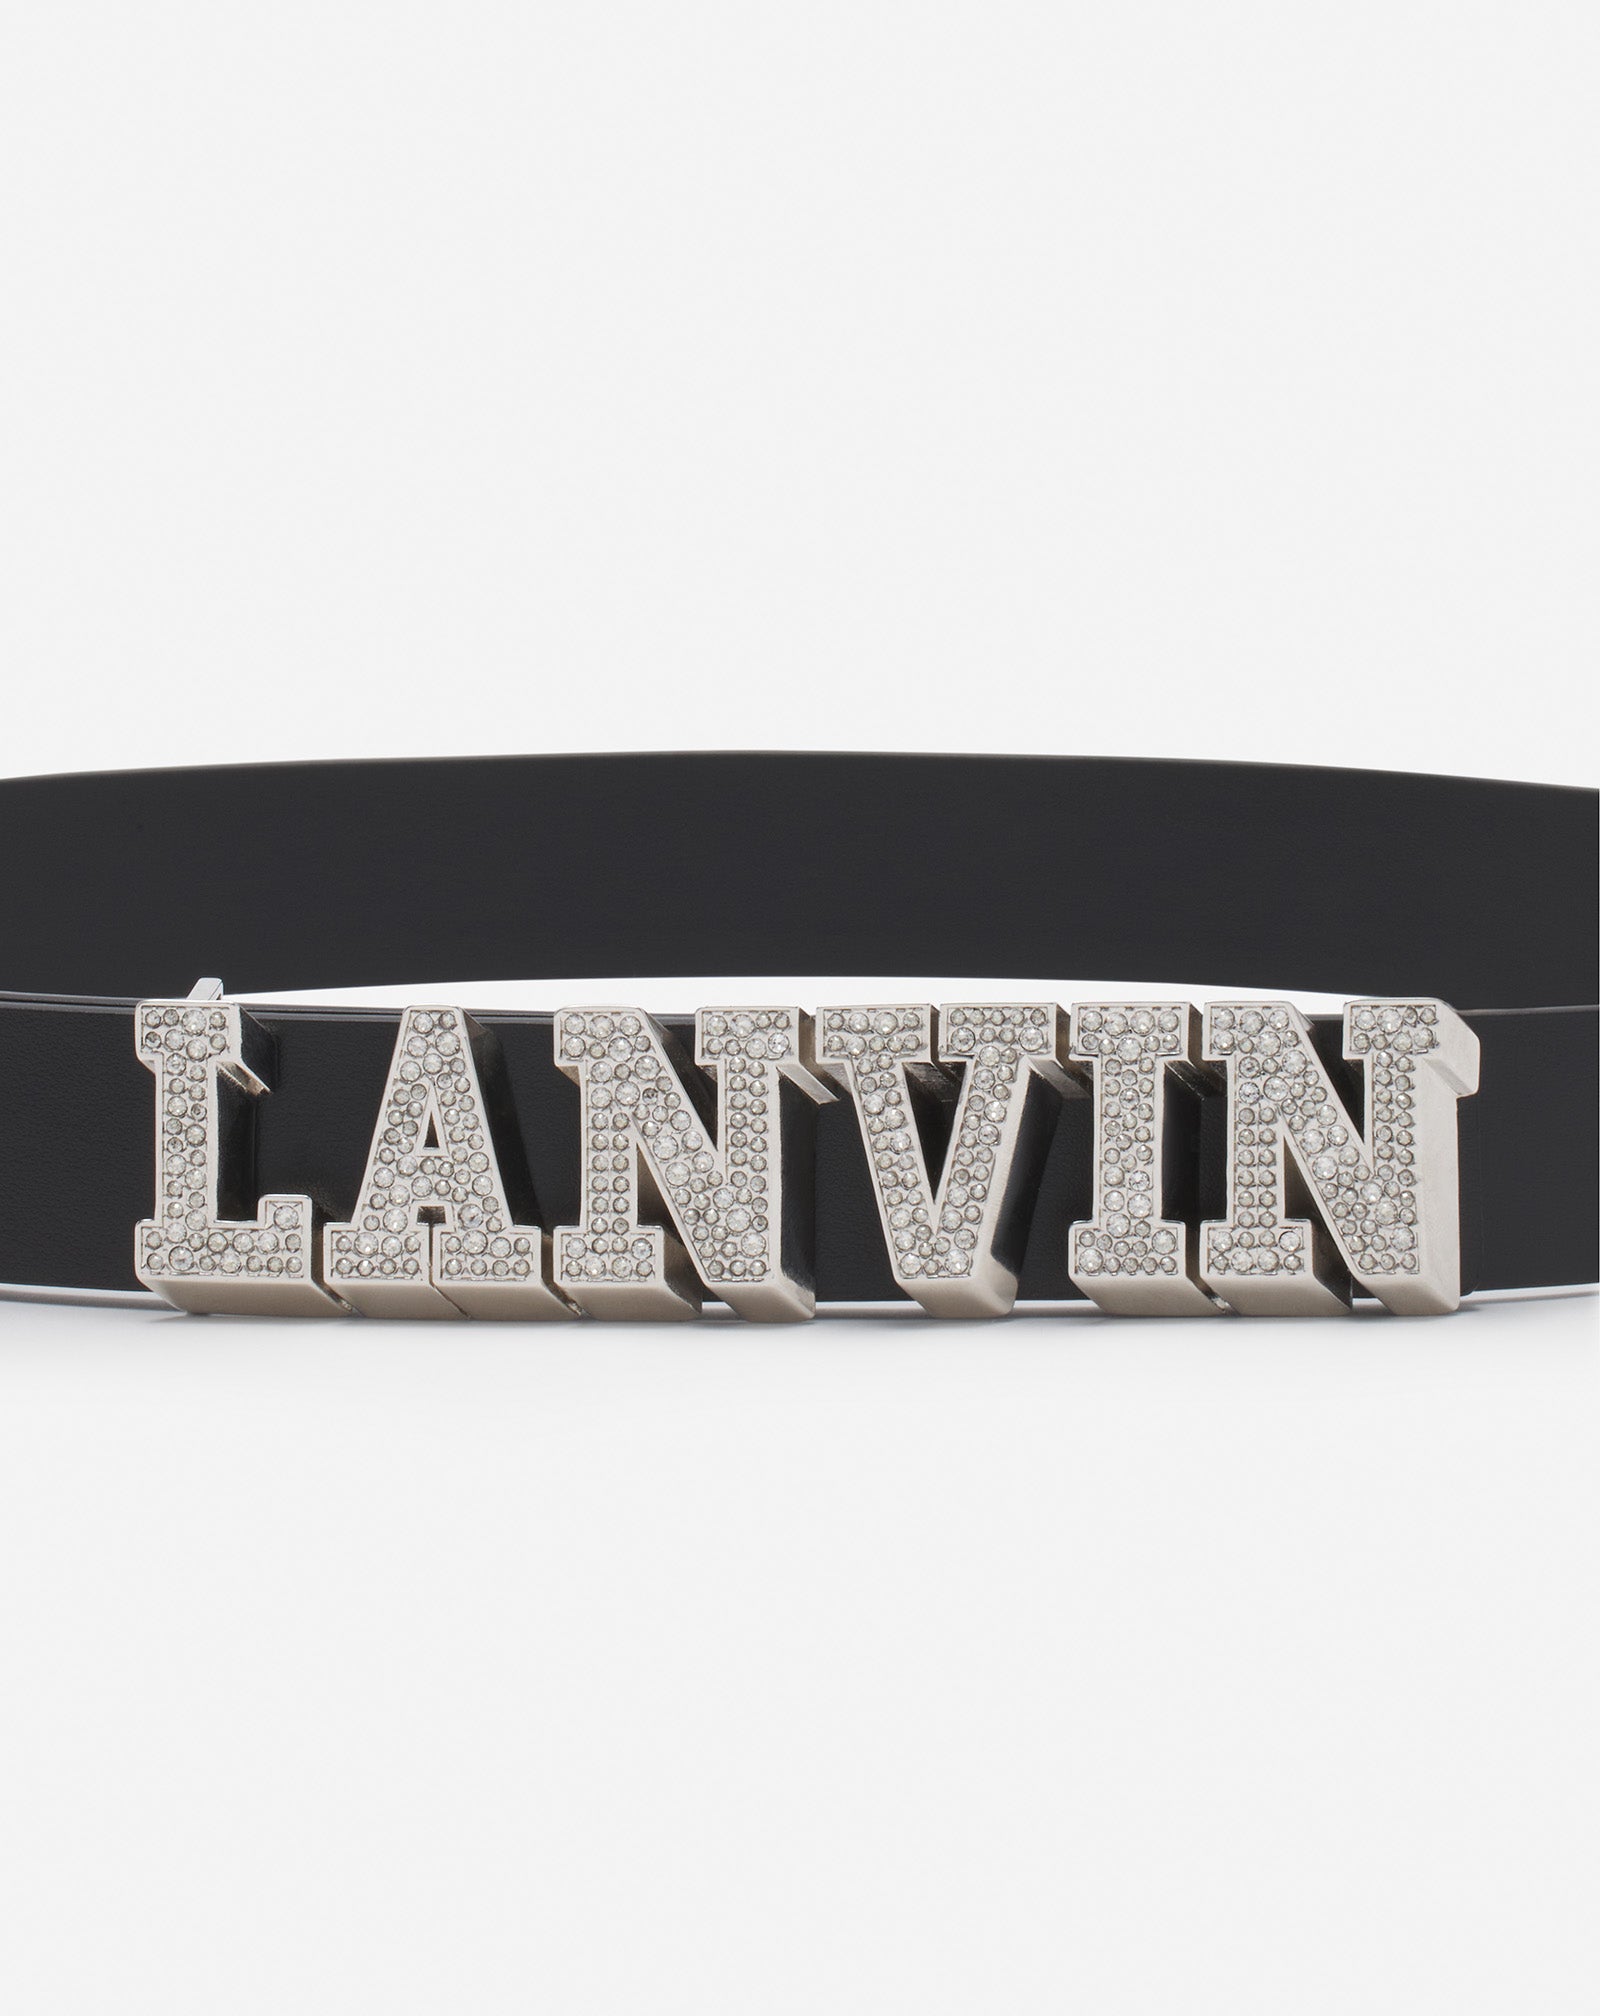 Lanvin x future leather belt with rhinestones